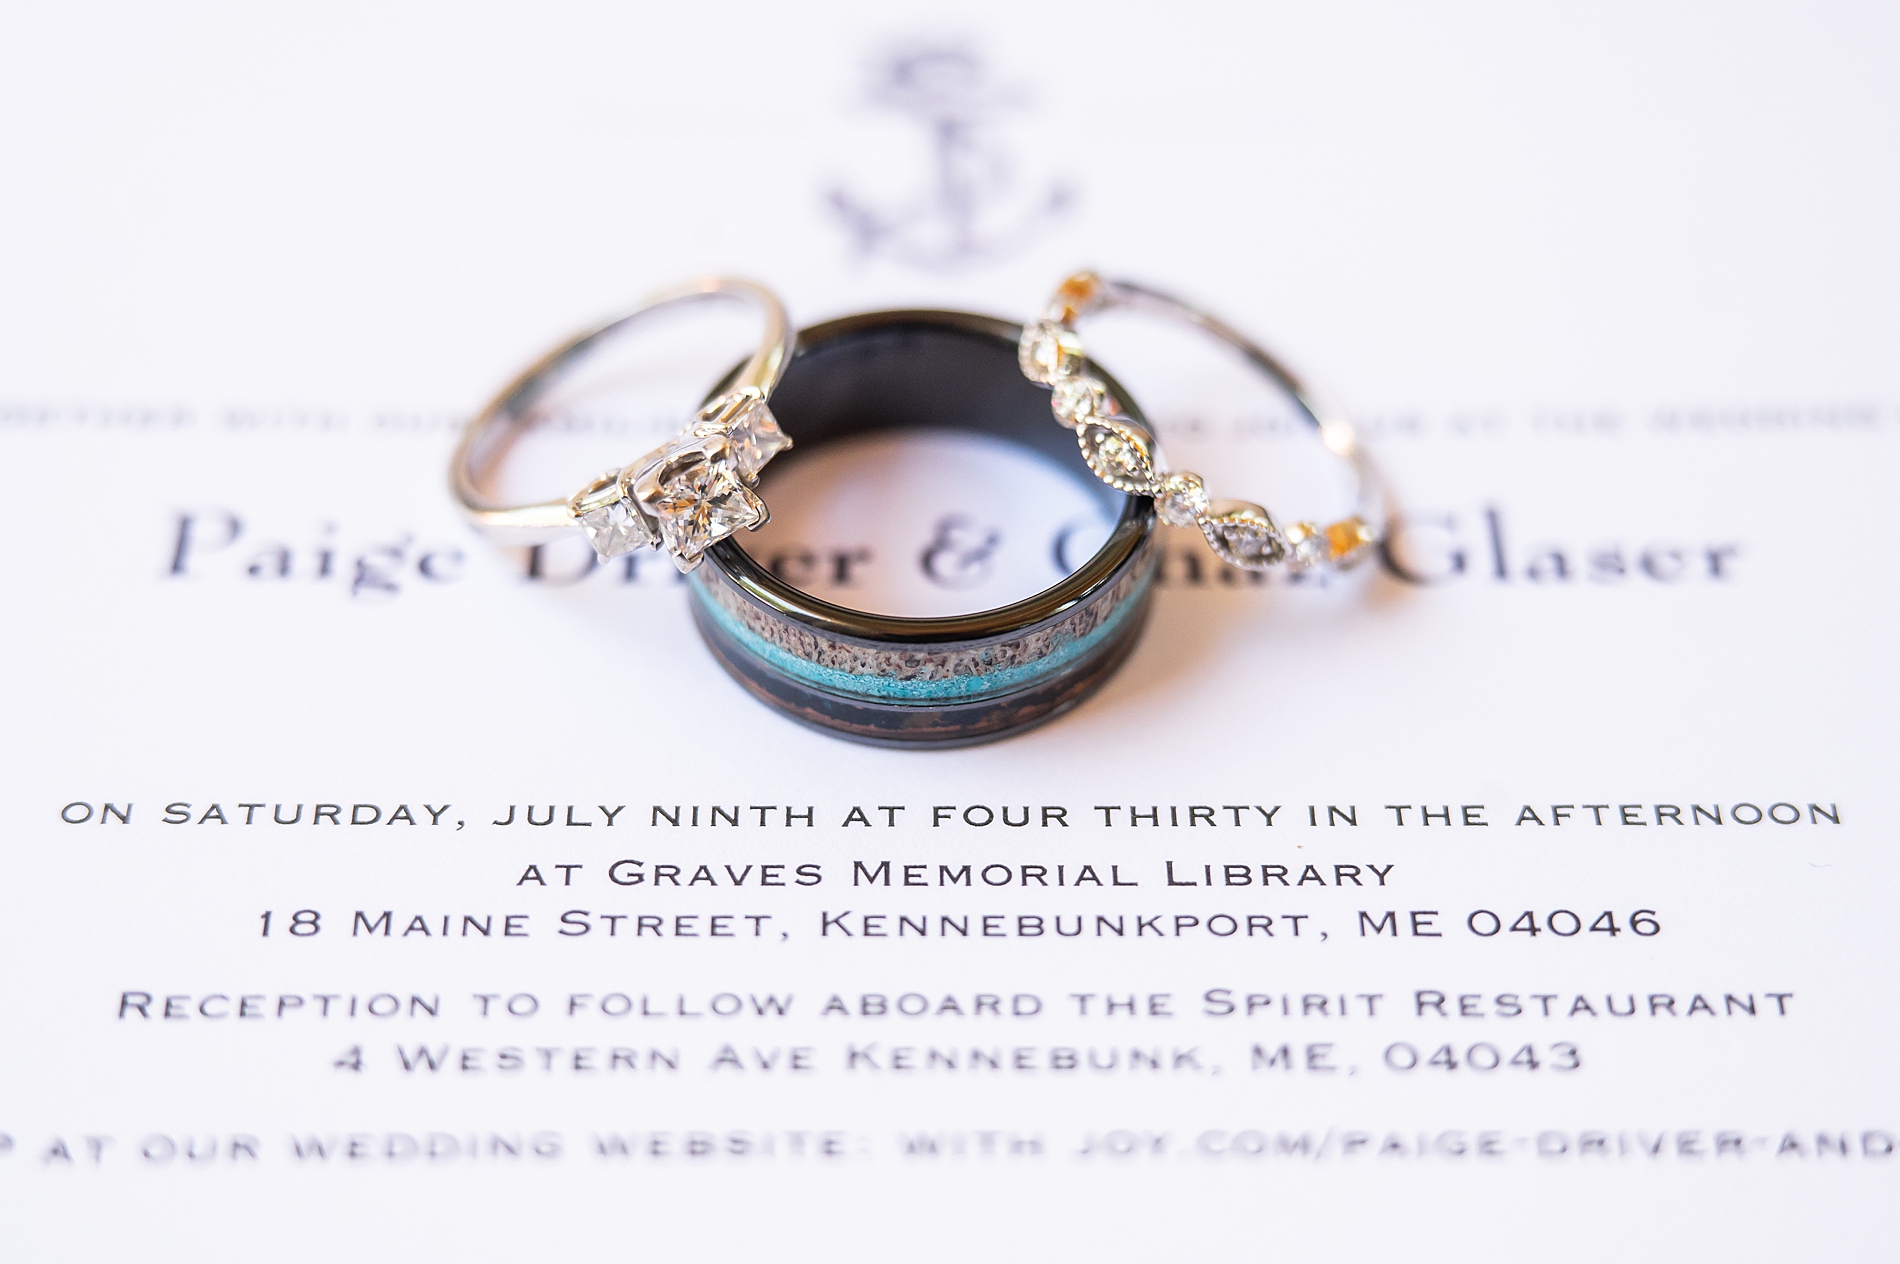 wedding rings on invitations